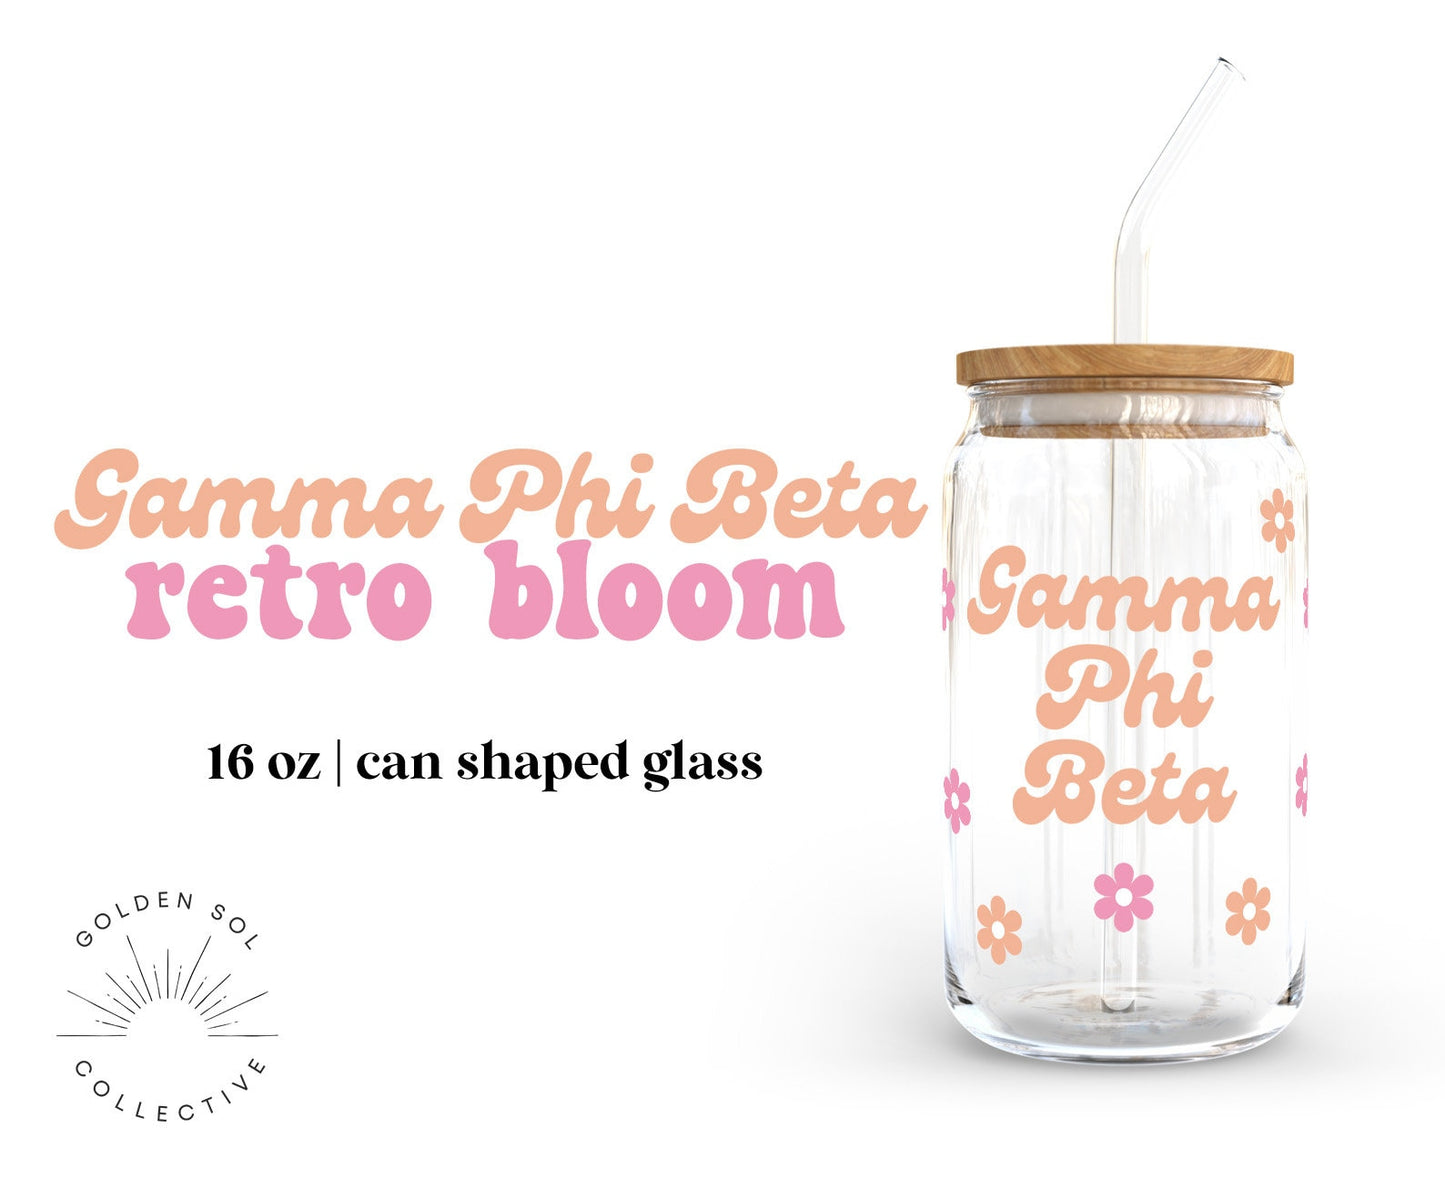 Gamma Phi Beta Sorority Retro Bloom Can Shaped Glass